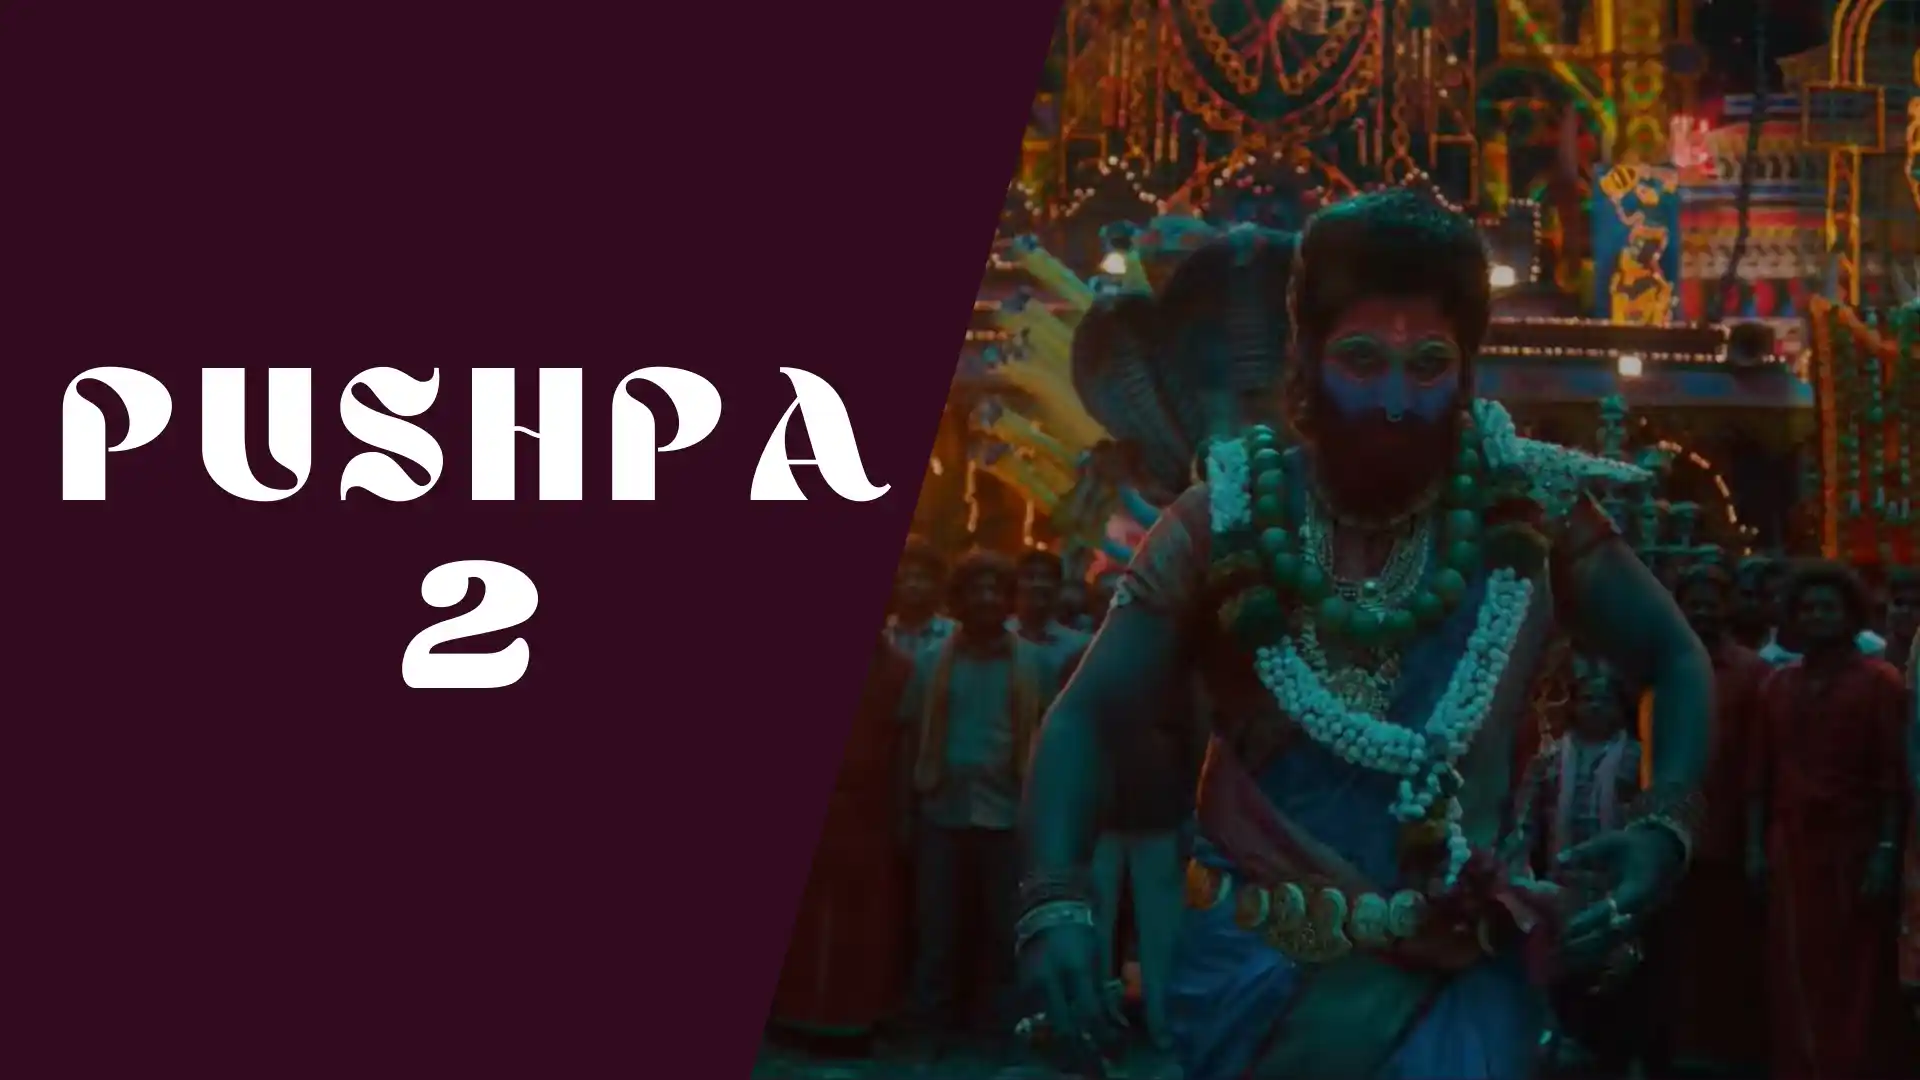 Pushpa 2 full movie in Hindi download